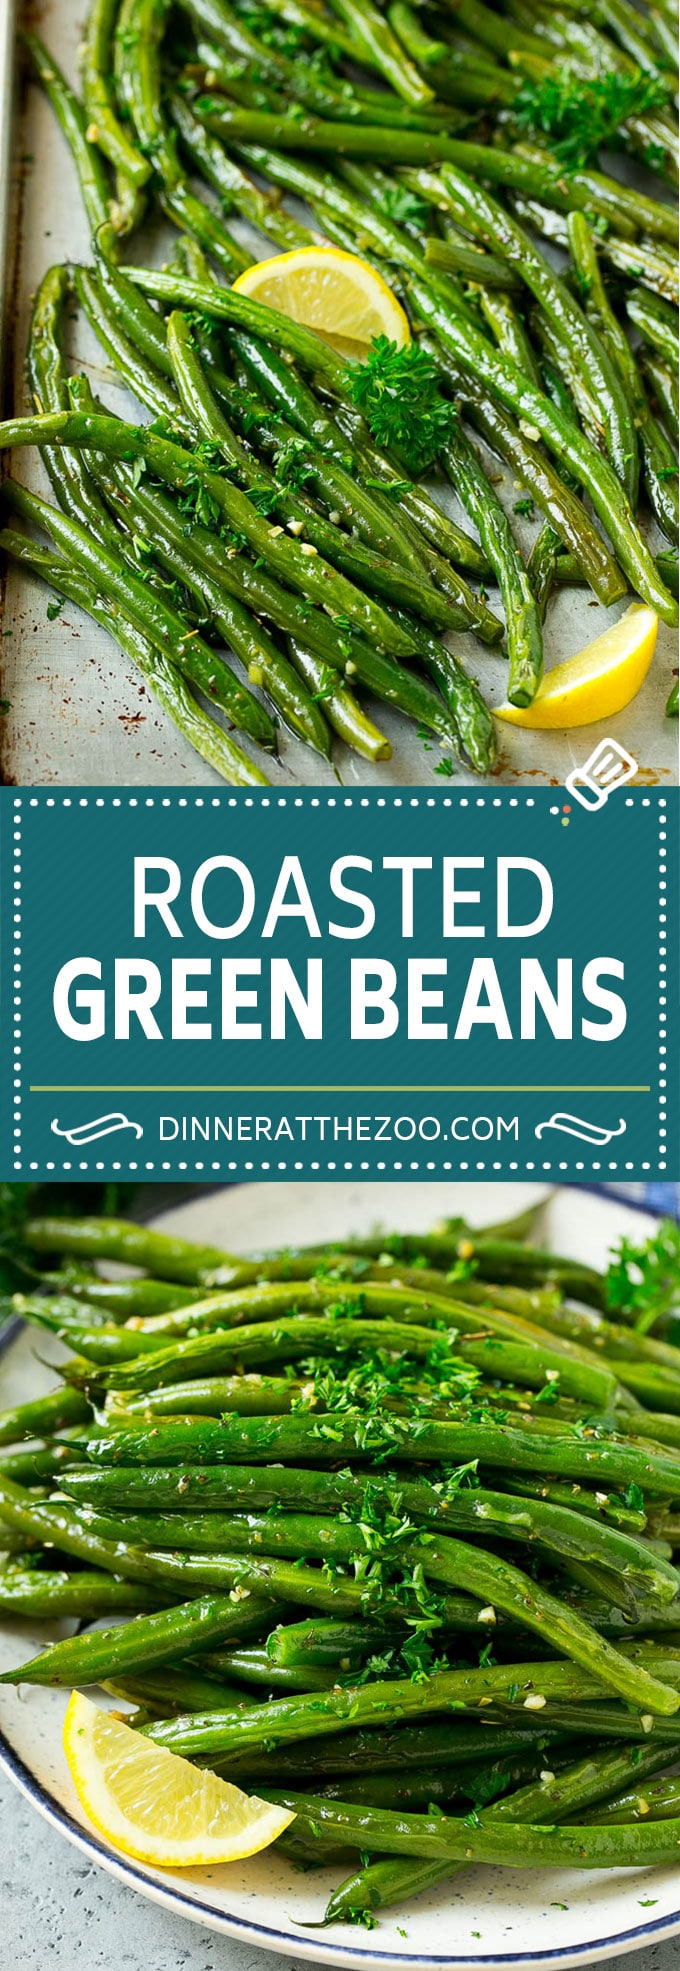 Roasted Green Beans Recipe | Garlic Green Beans | Easy Green Beans #greenbeans #garlic #vegetables #vegetarian #sidedish #dinner #dinneratthezoo